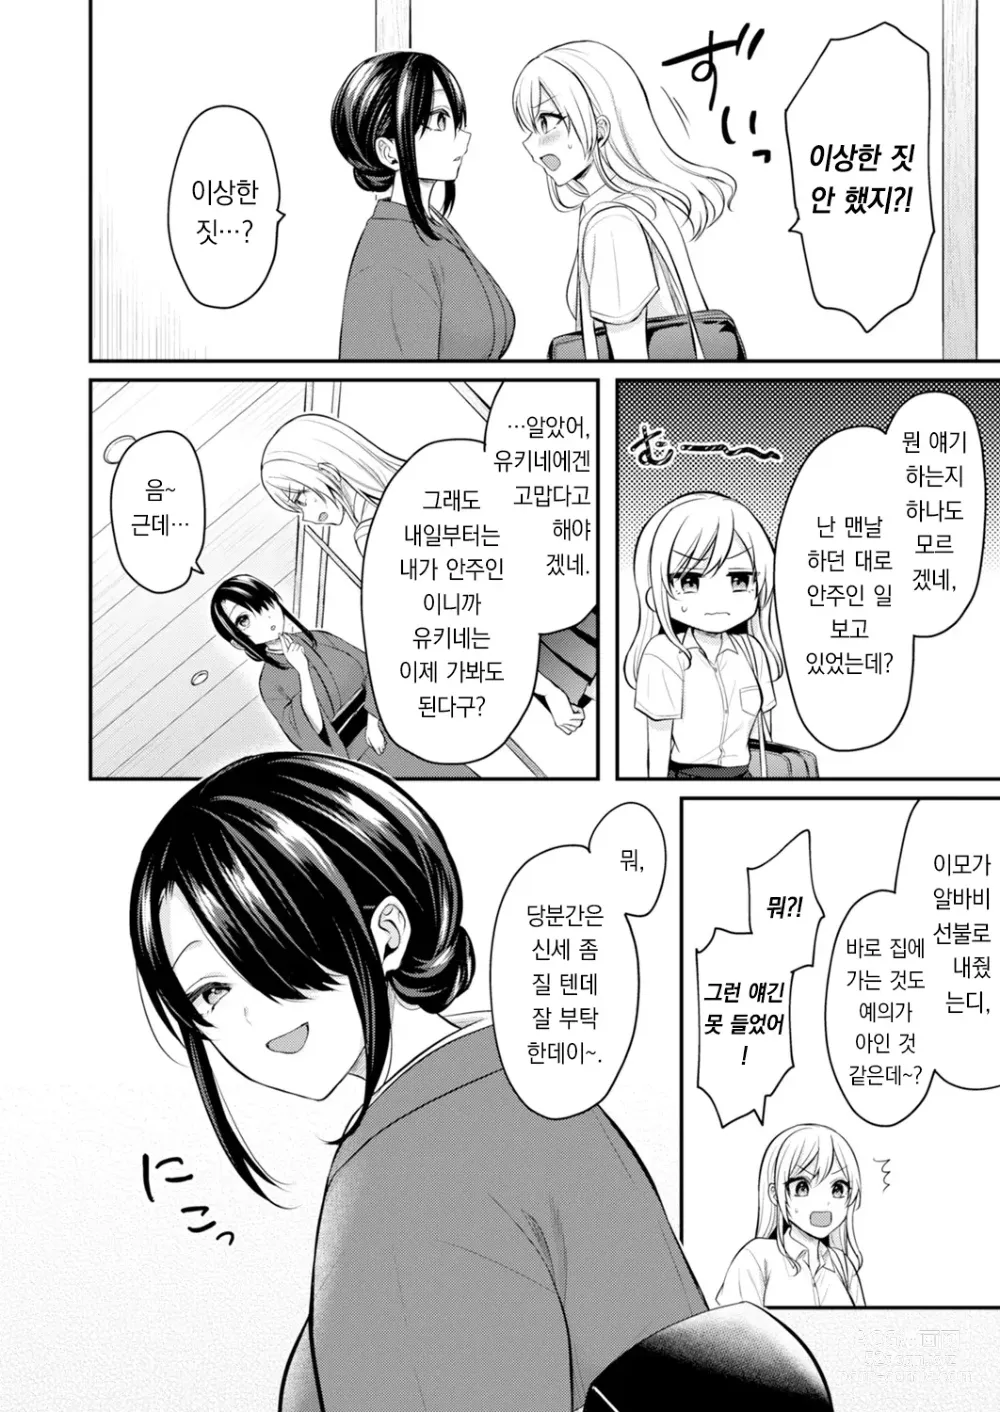 Page 4 of manga 내 여름방학은 젊은 갸루 안주인과 알바 생활?! 6